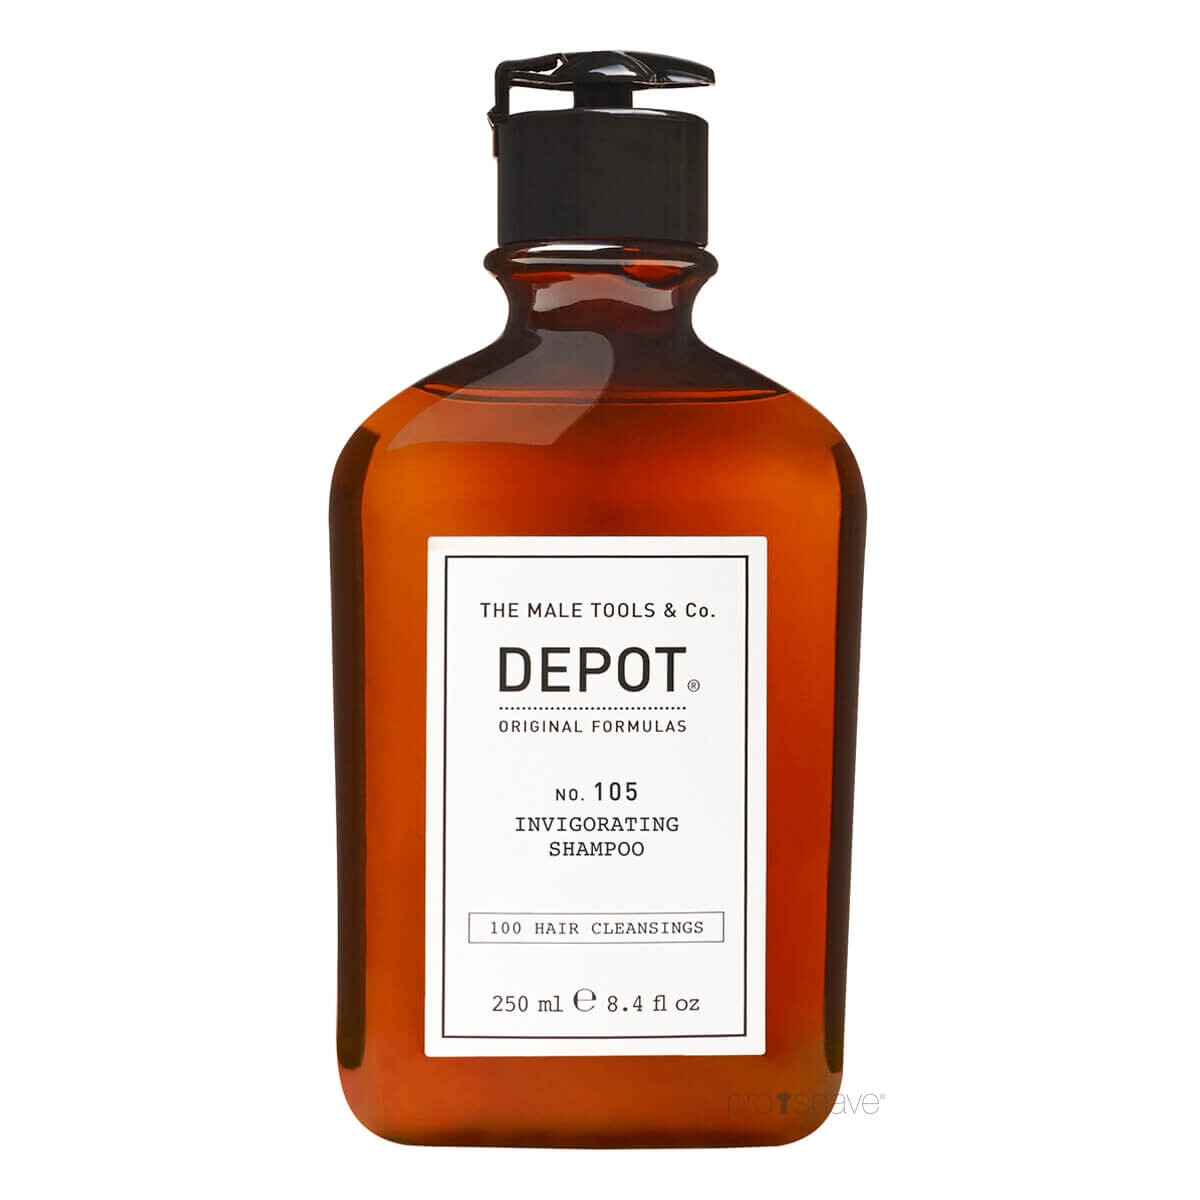 Depot Invigorating Shampoo, No. 105, 250 ml.